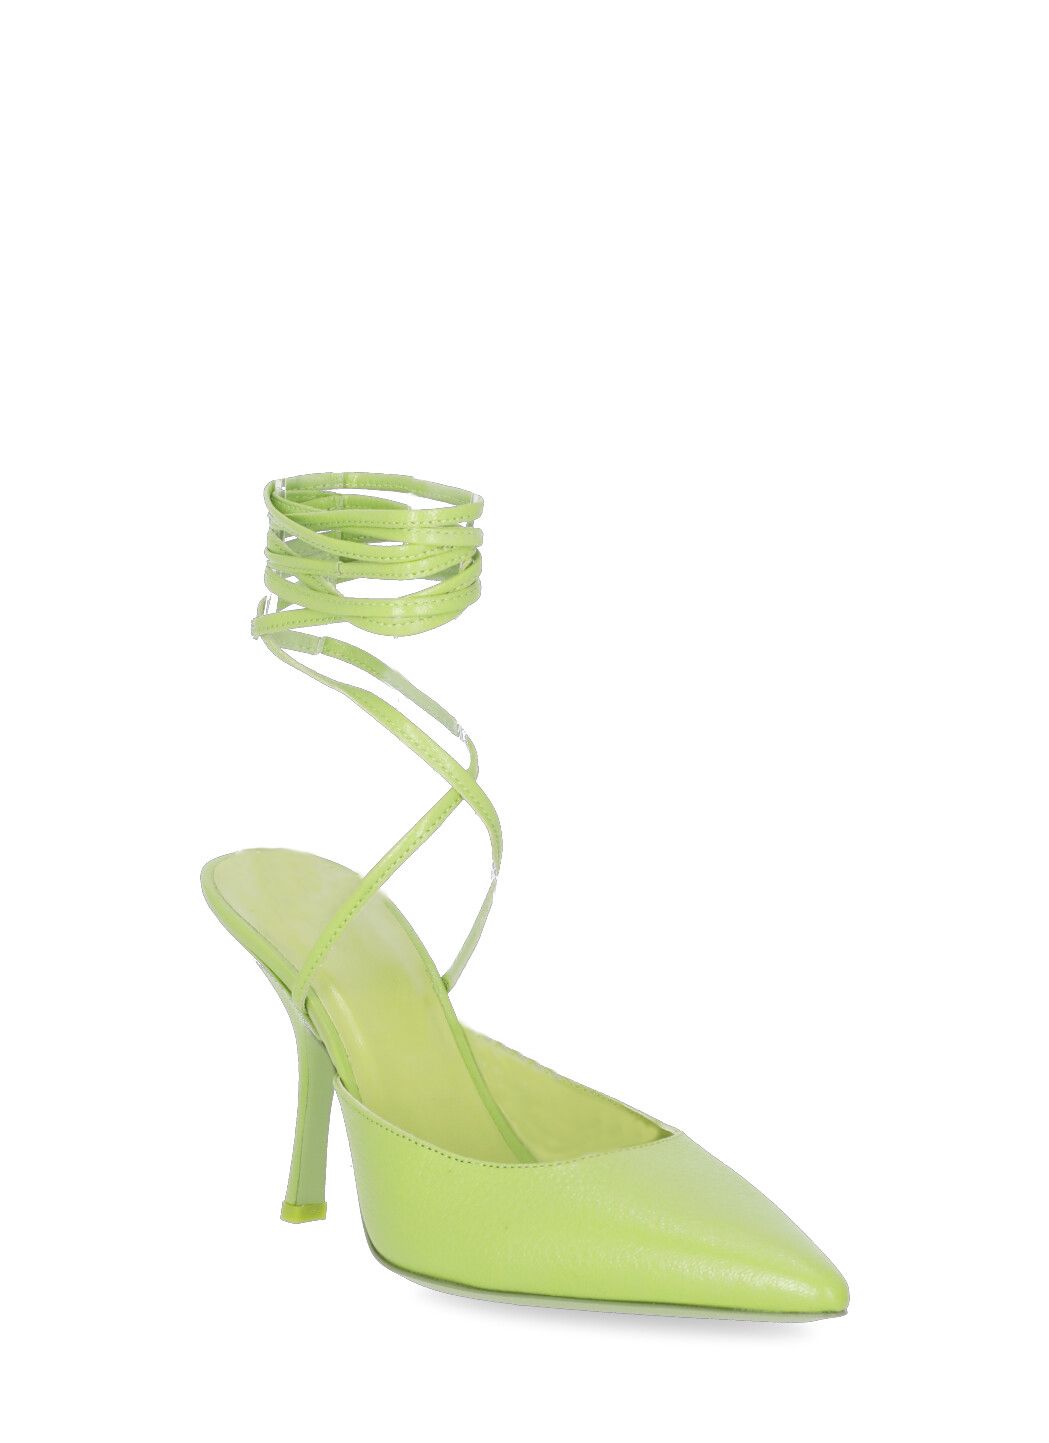 Jen heeled shoe